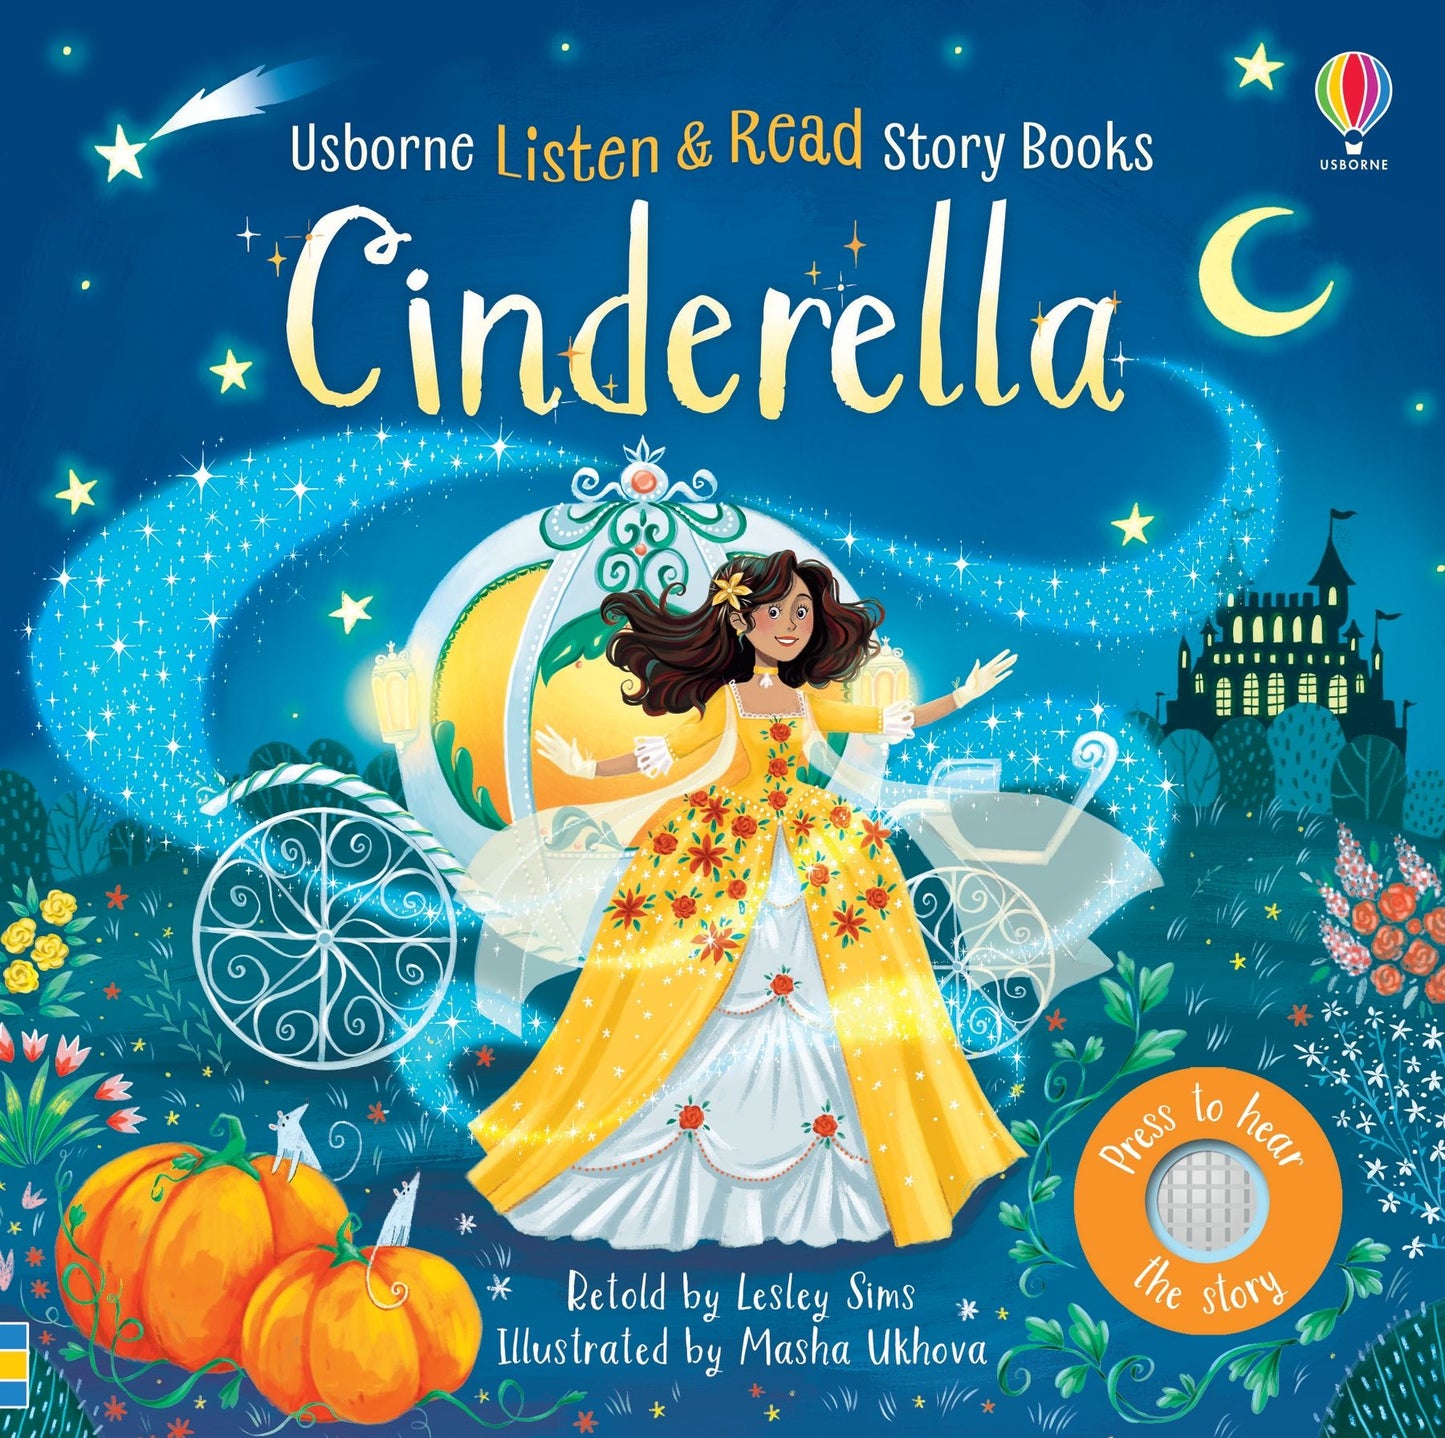 Usborne Listen & Read Story Books - Cinderella